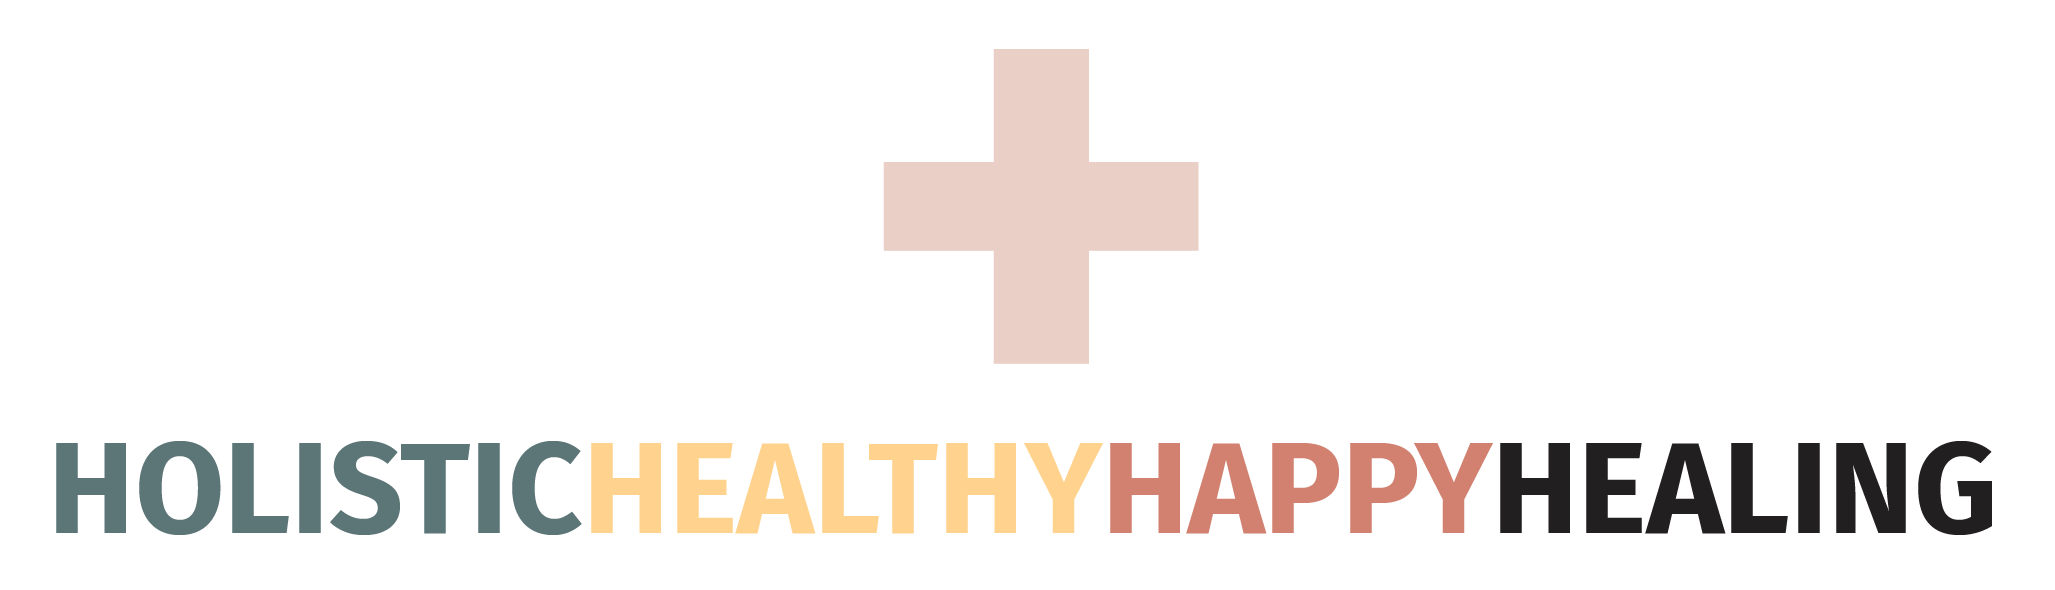 Holistic Healthy Happy Healing